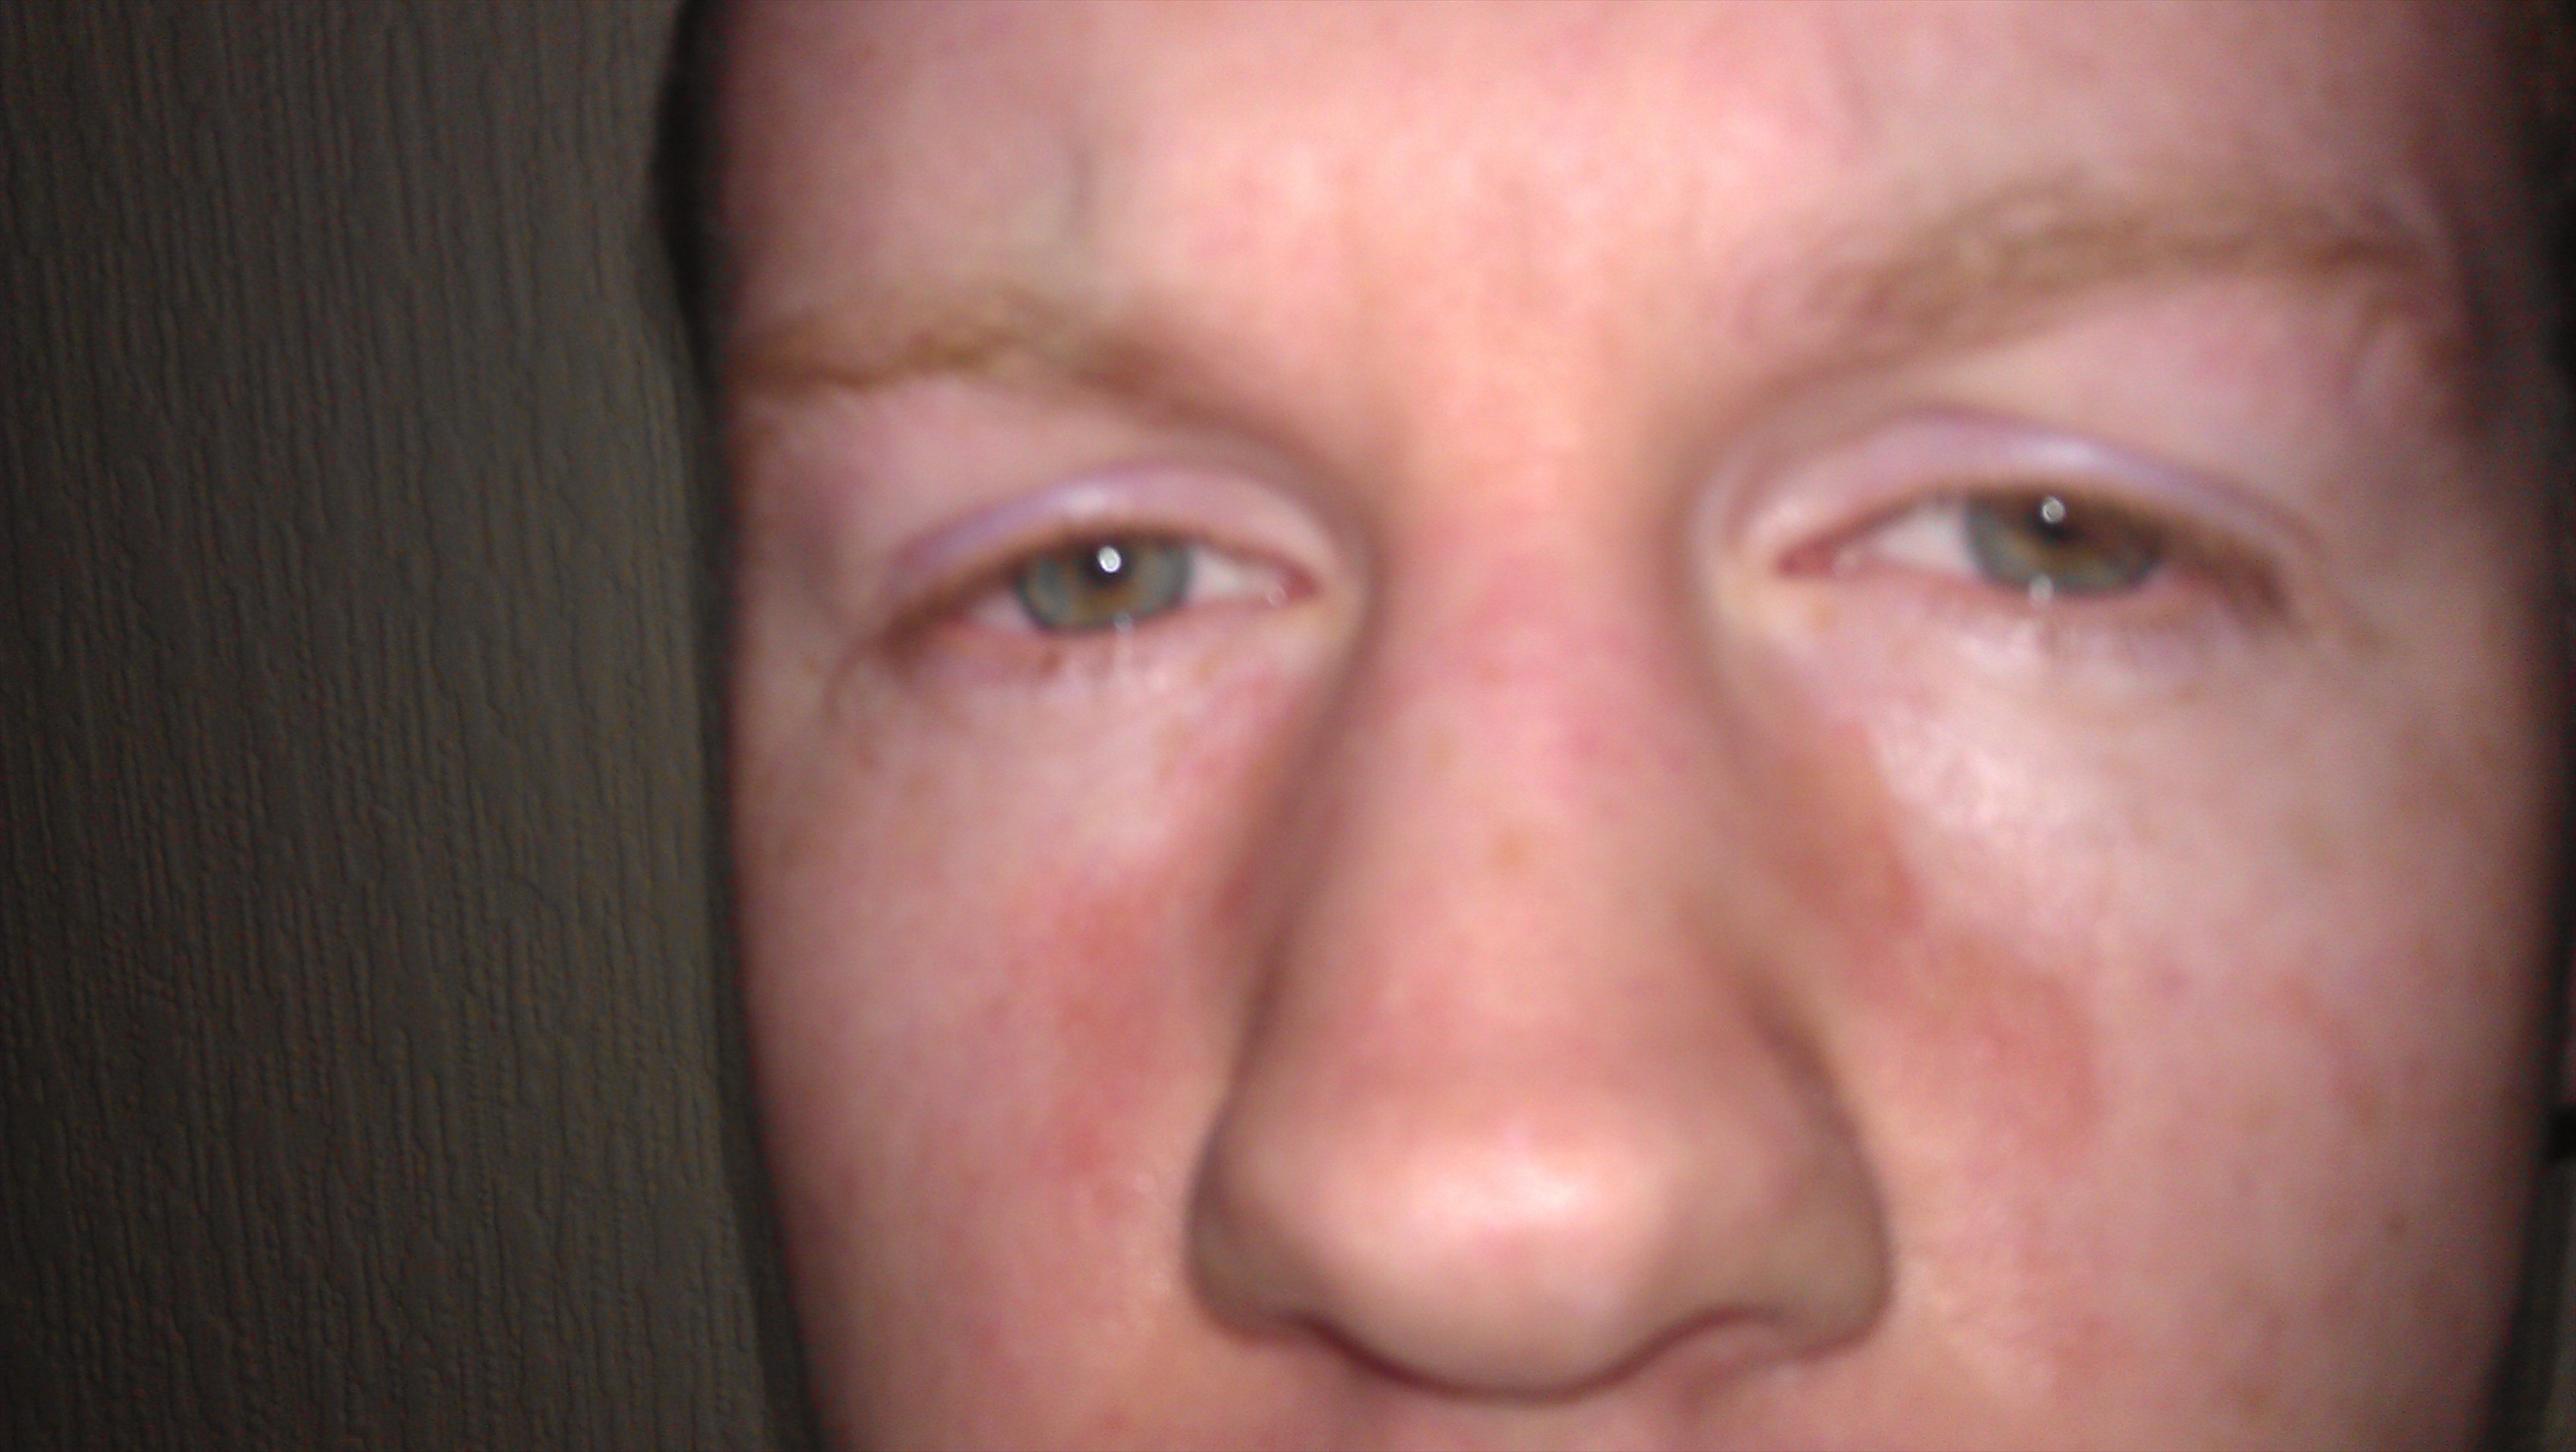 Skin Rash Under the Eye: Signs, Symptoms and Treatments